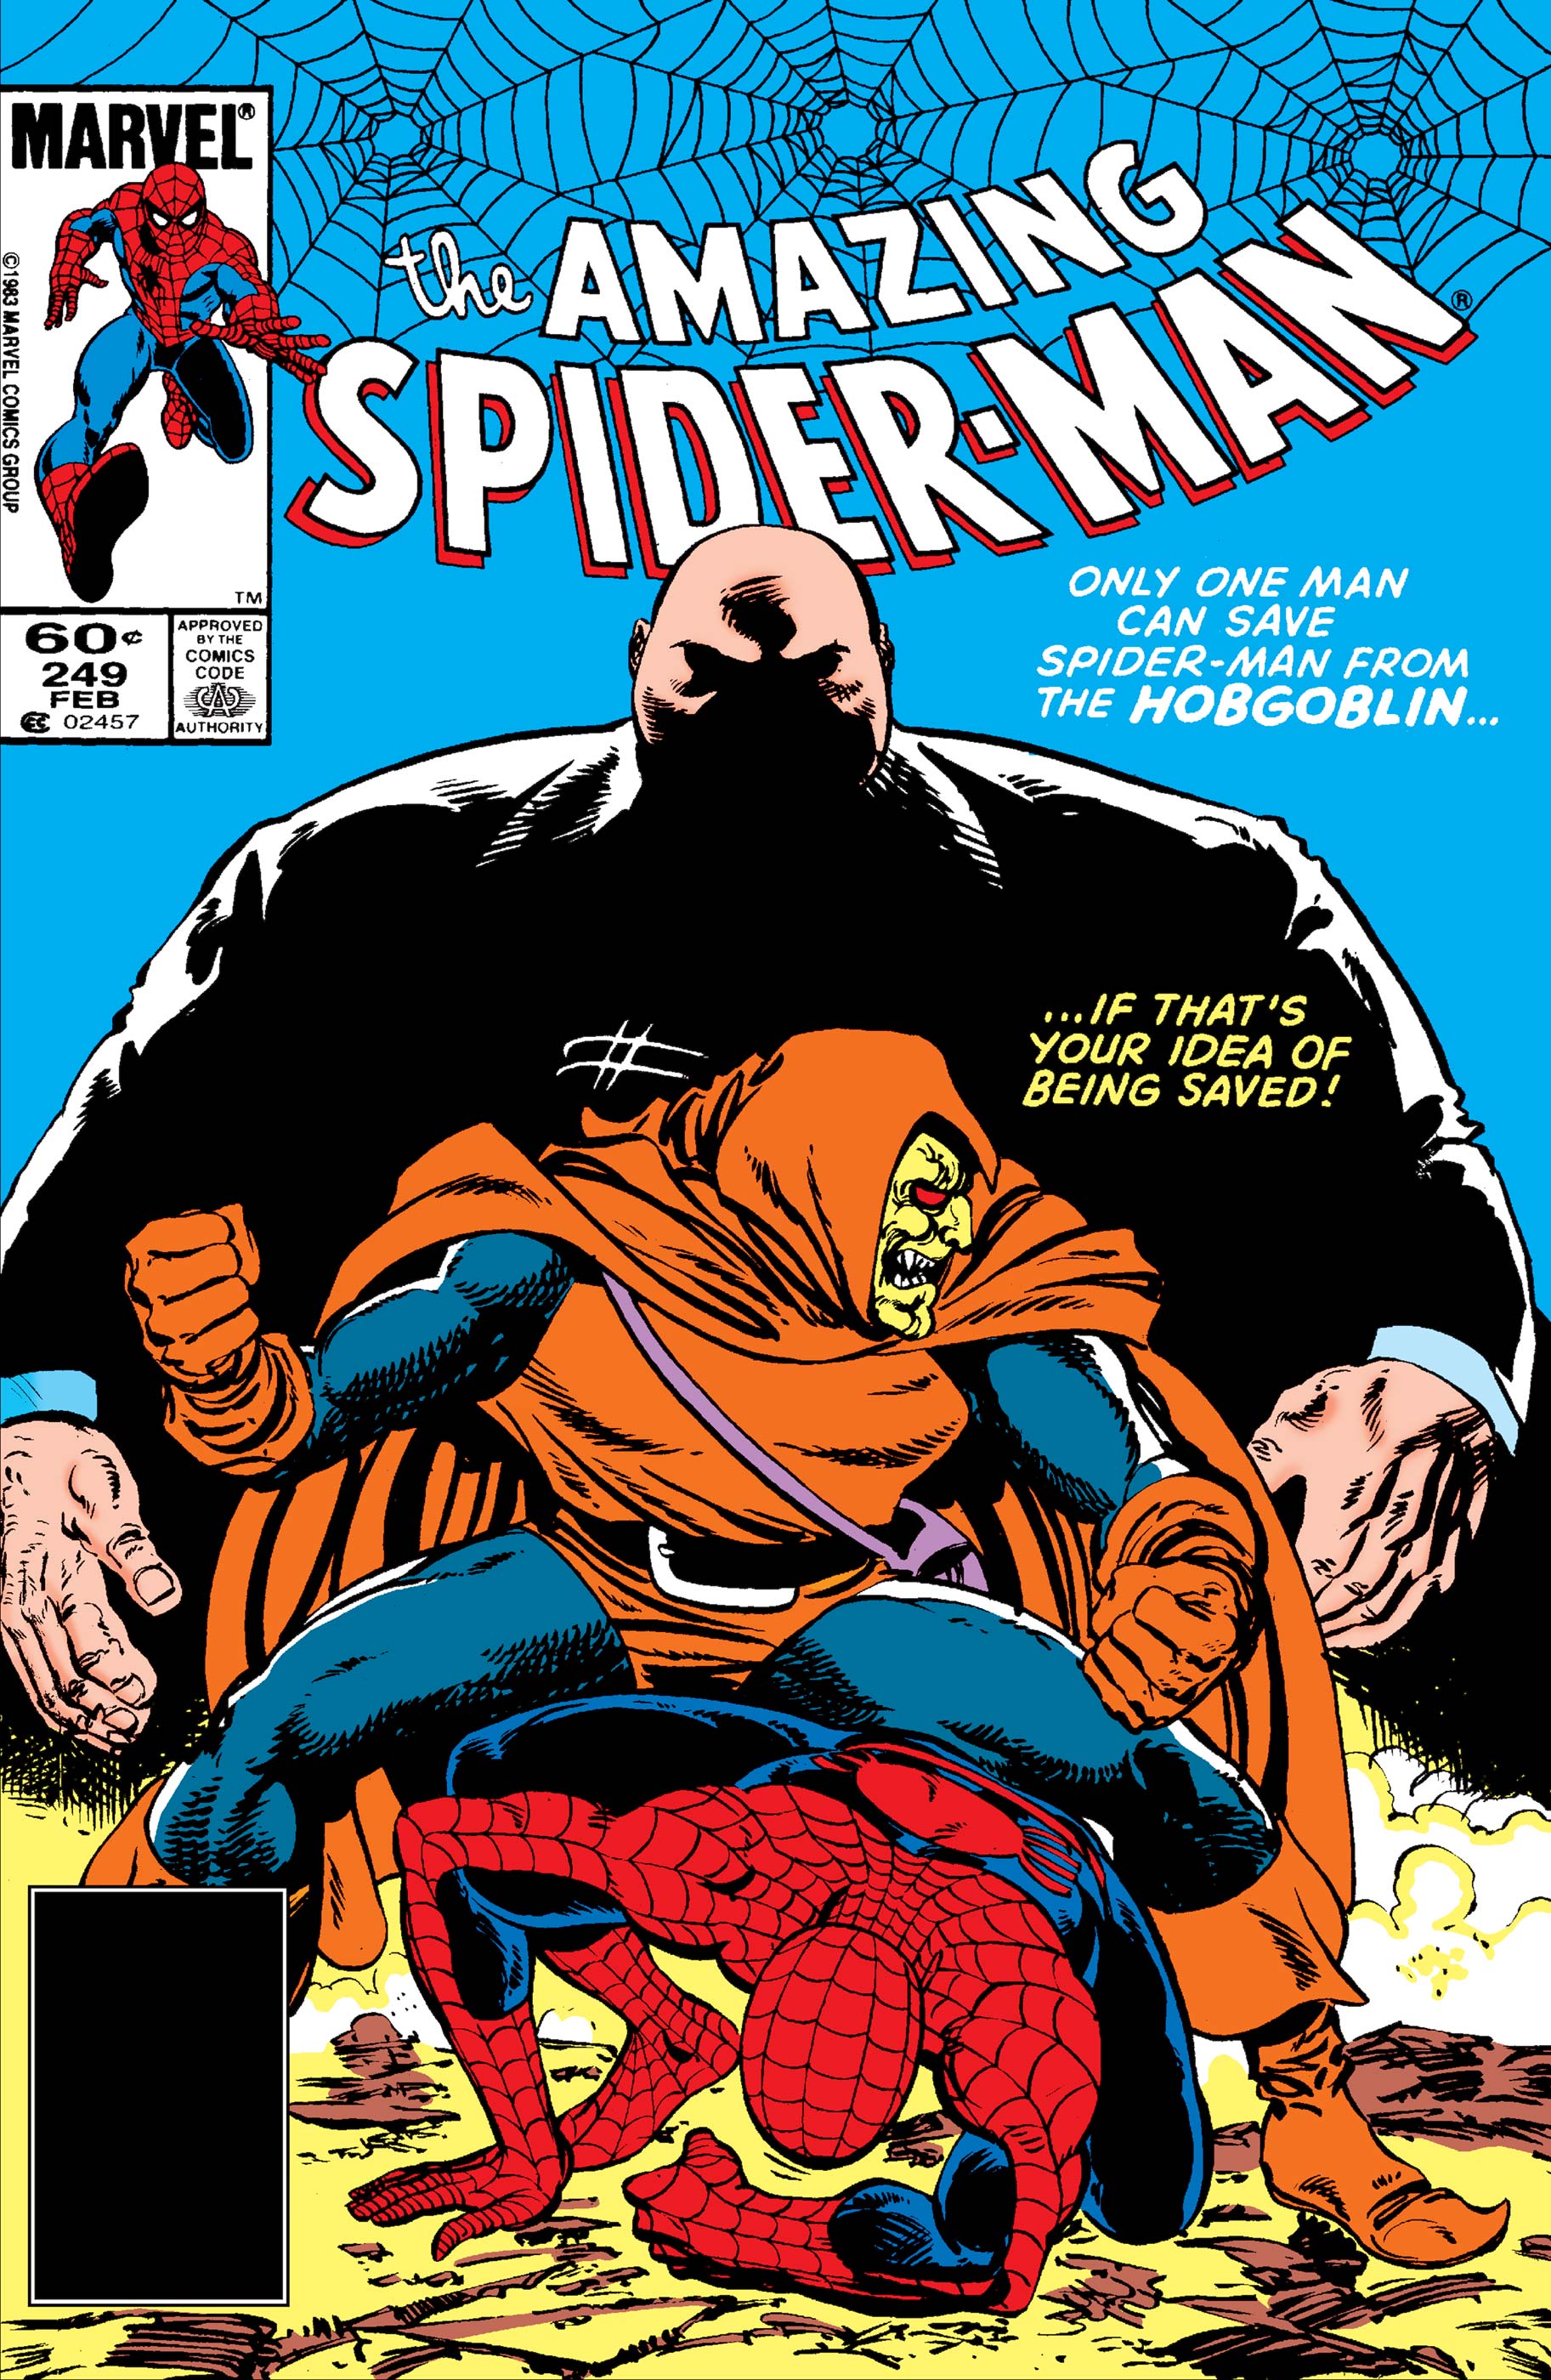 The Amazing Spider-Man (1963) #249